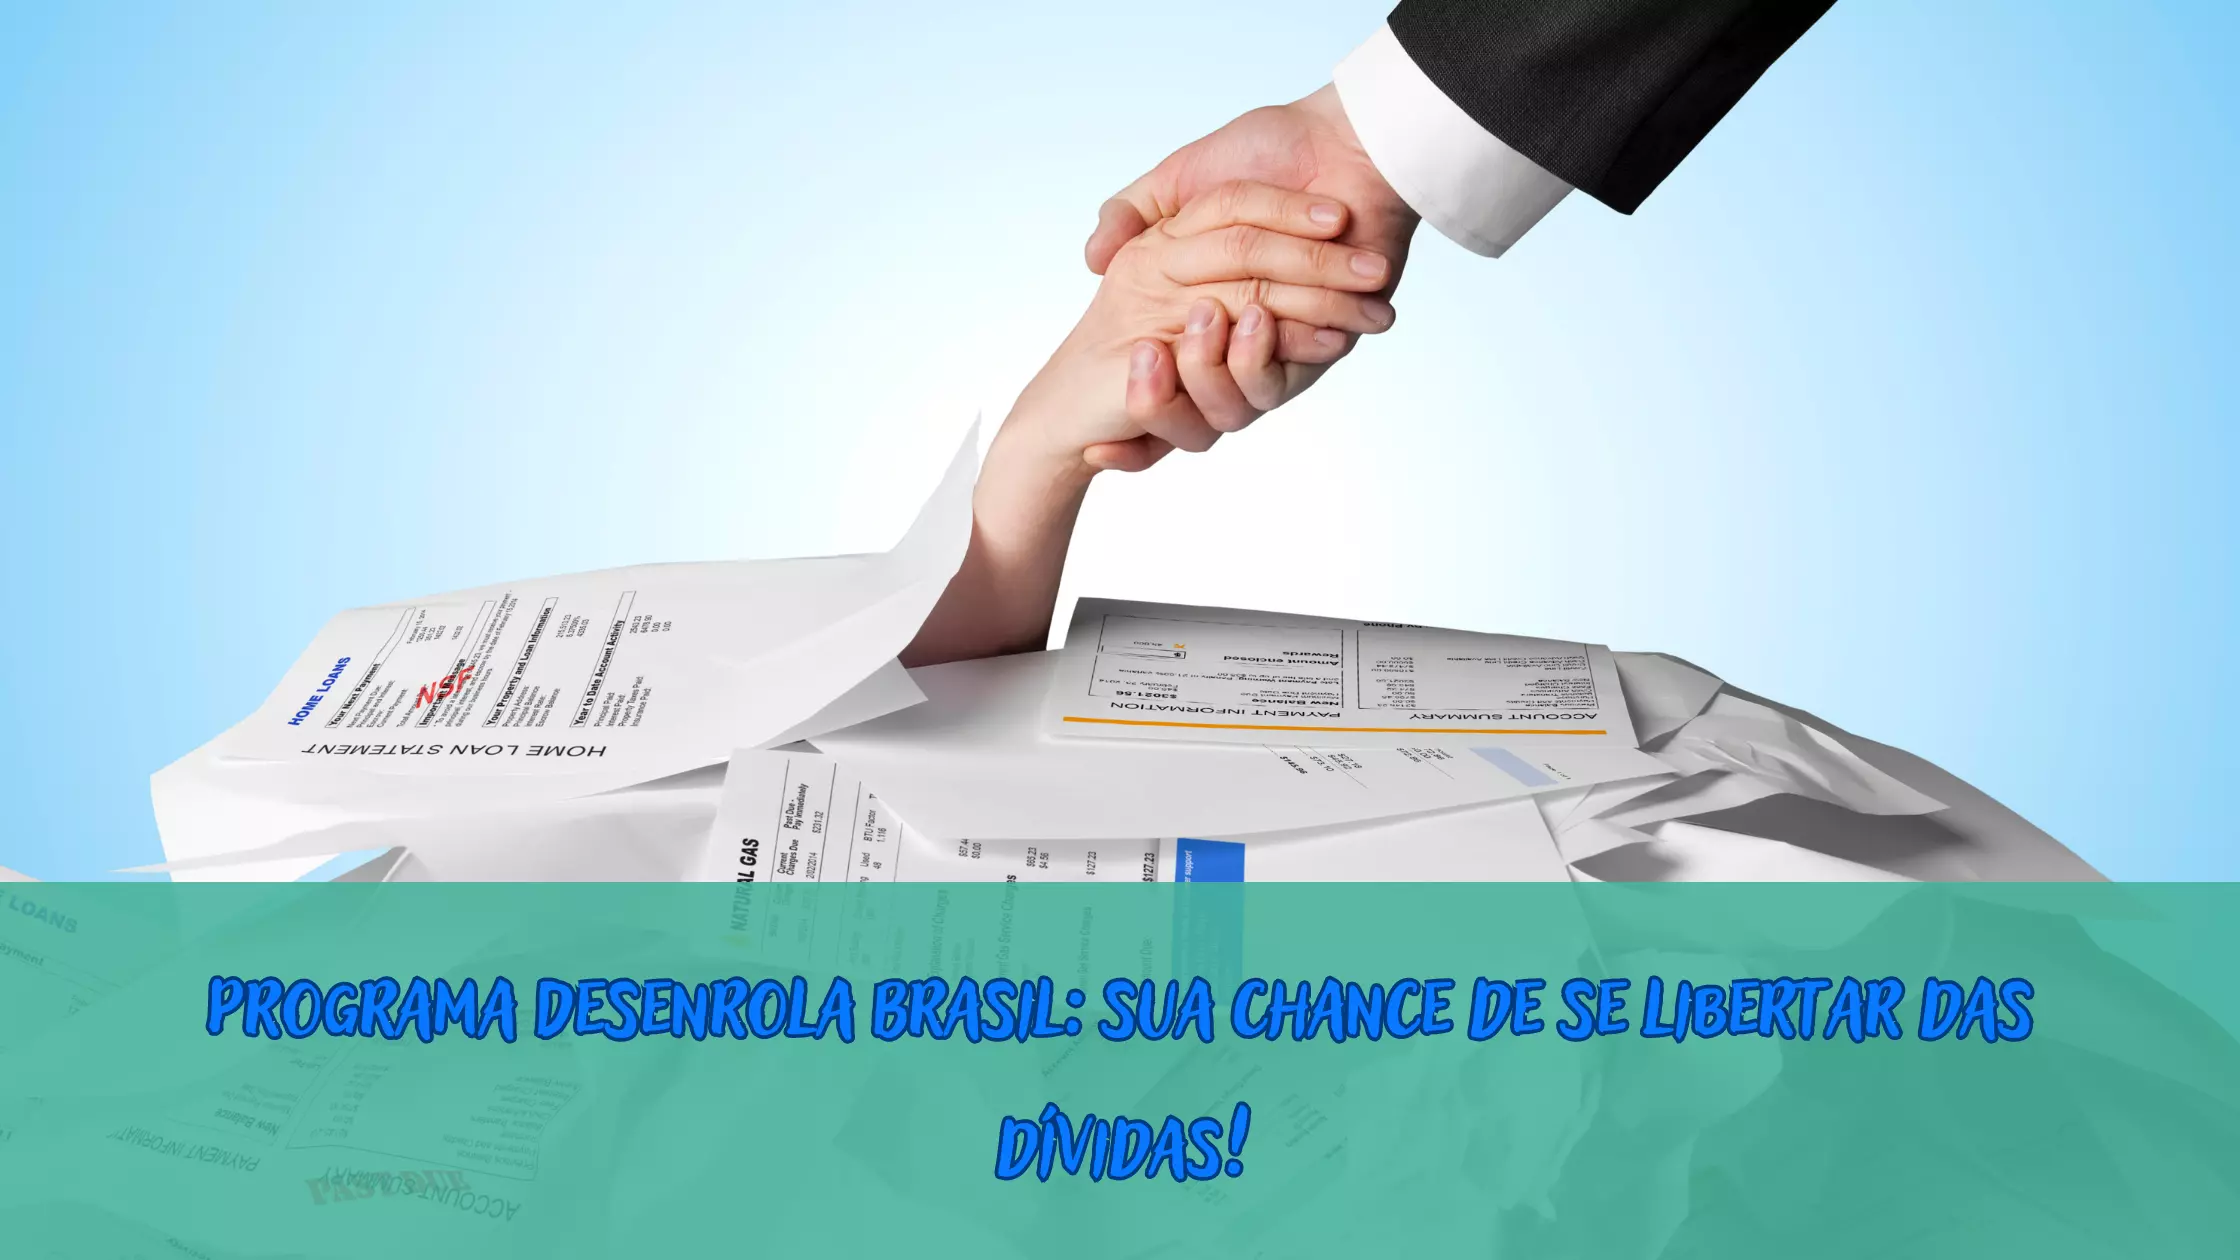 Programa Desenrola Brasil: sua chance de se libertar das dívidas! 